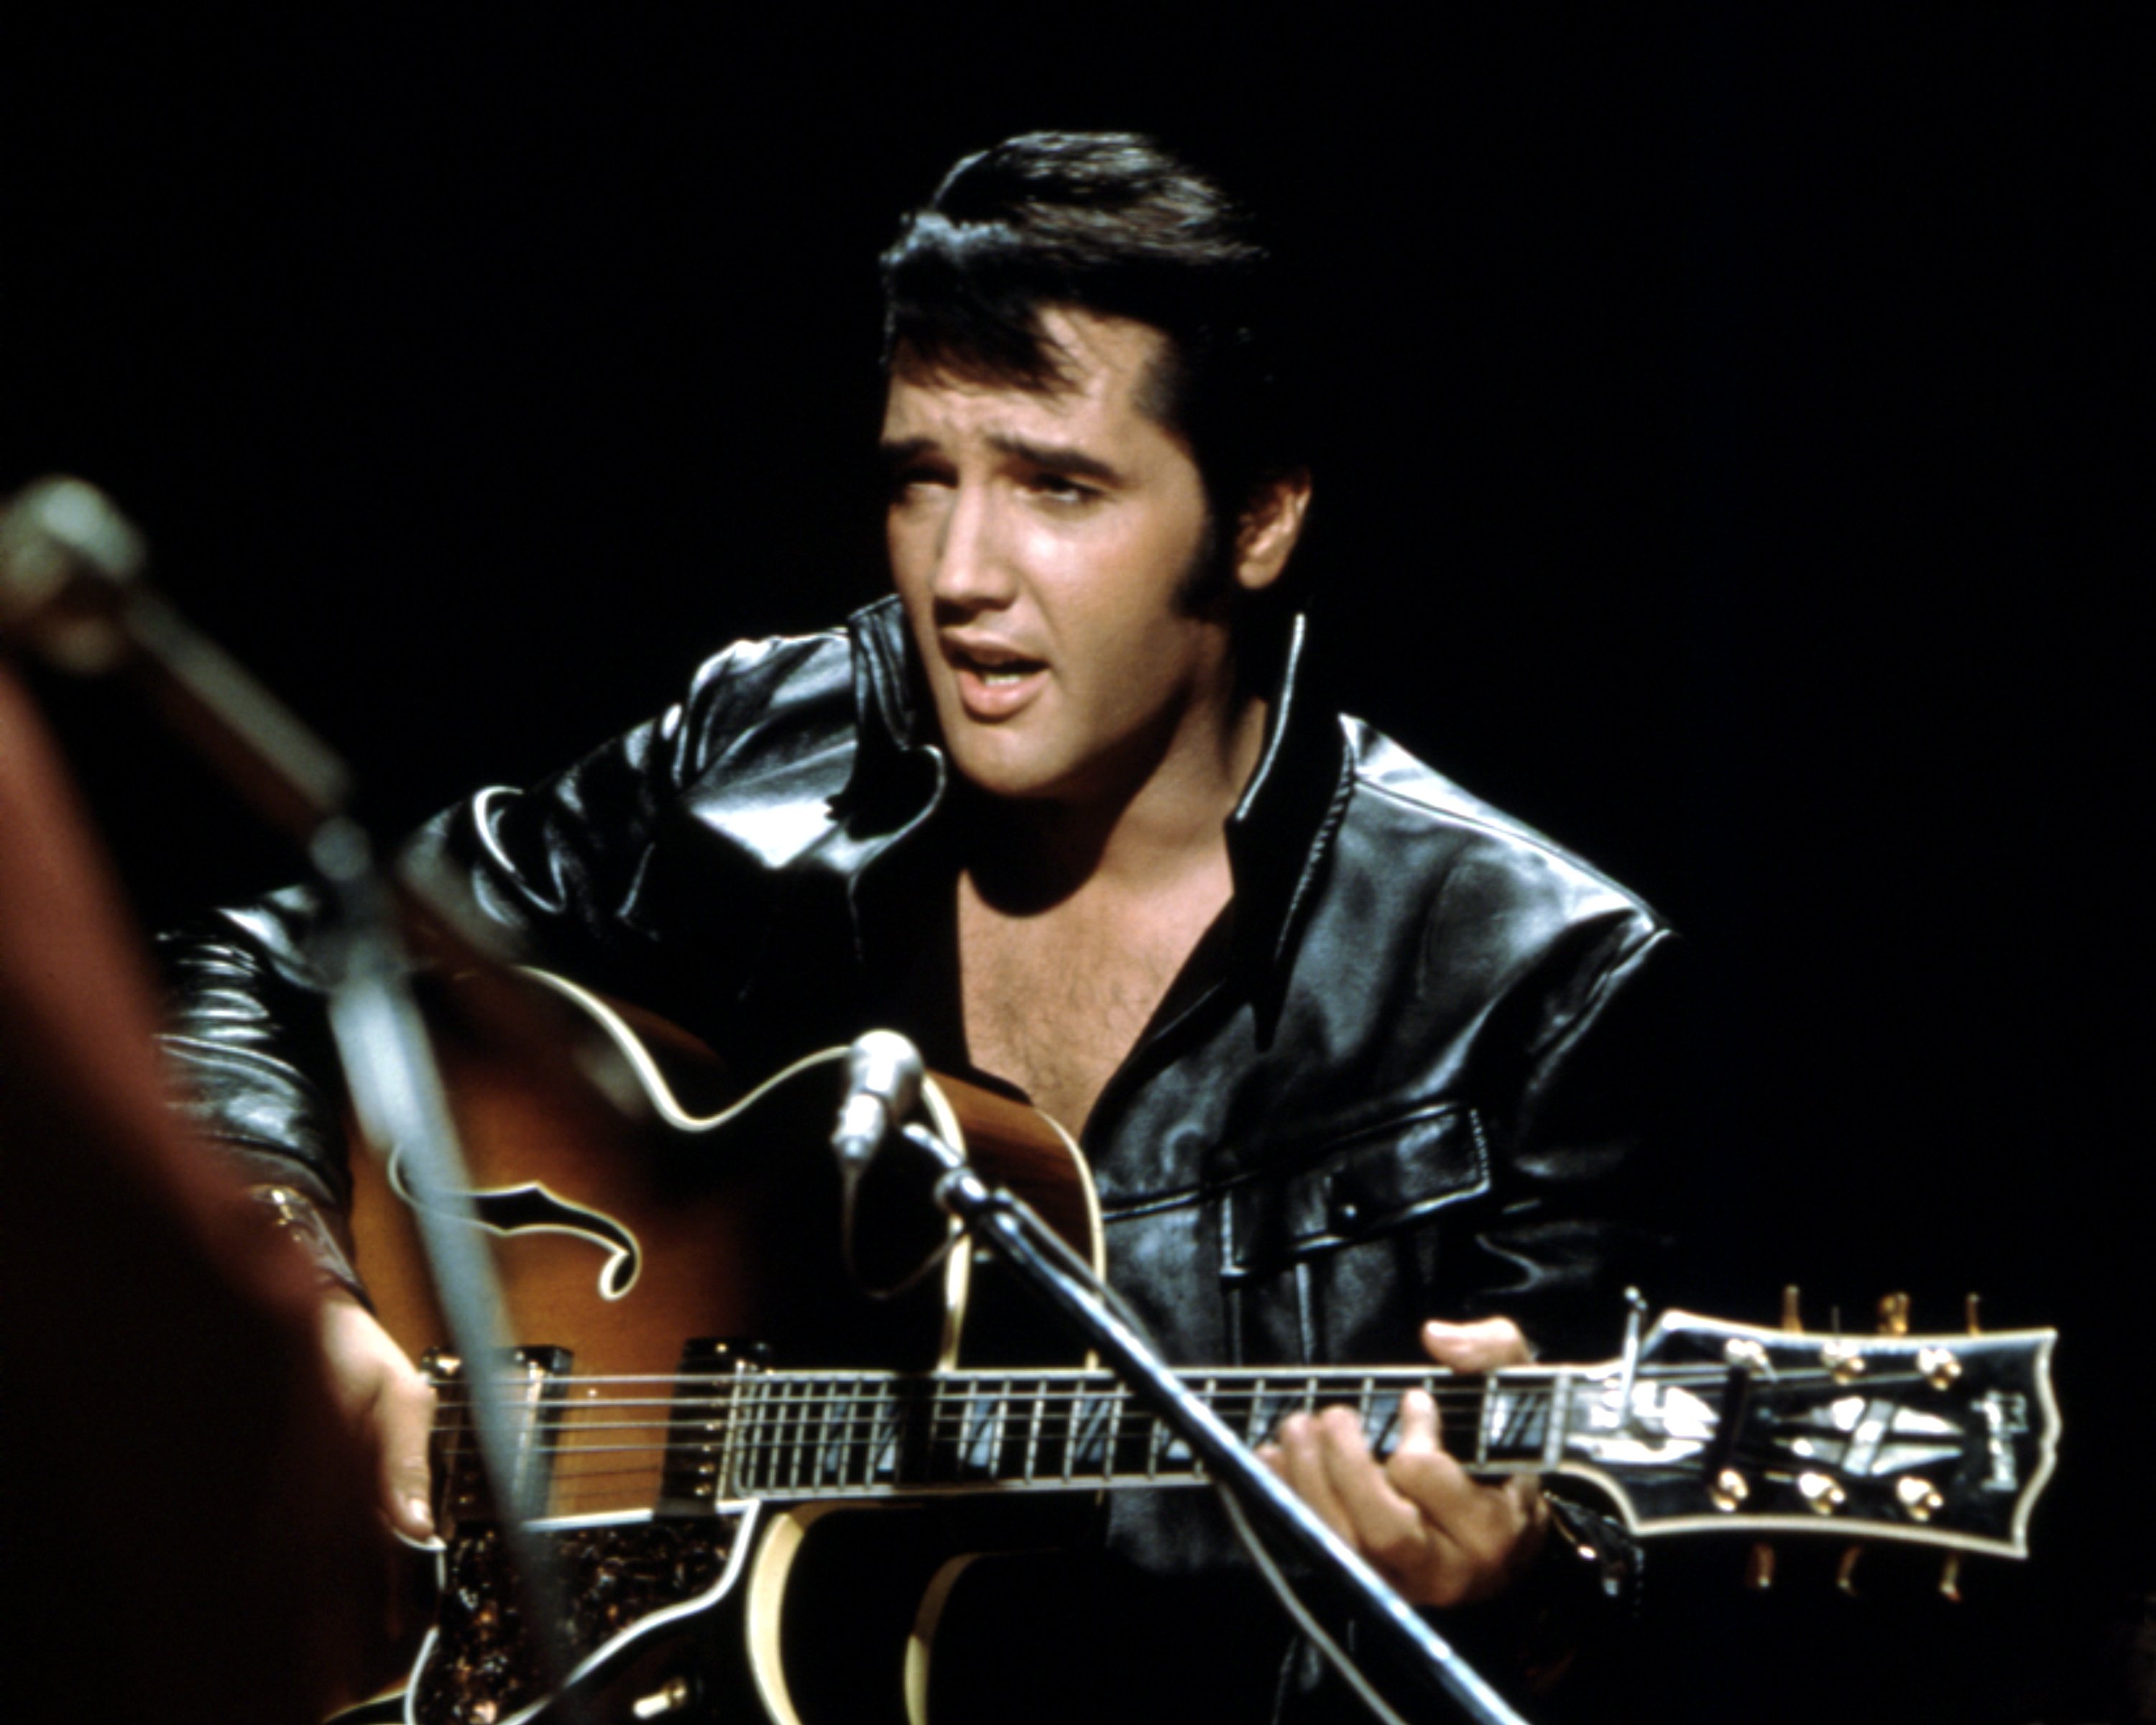 Elvis Presley playing songs on a guitar